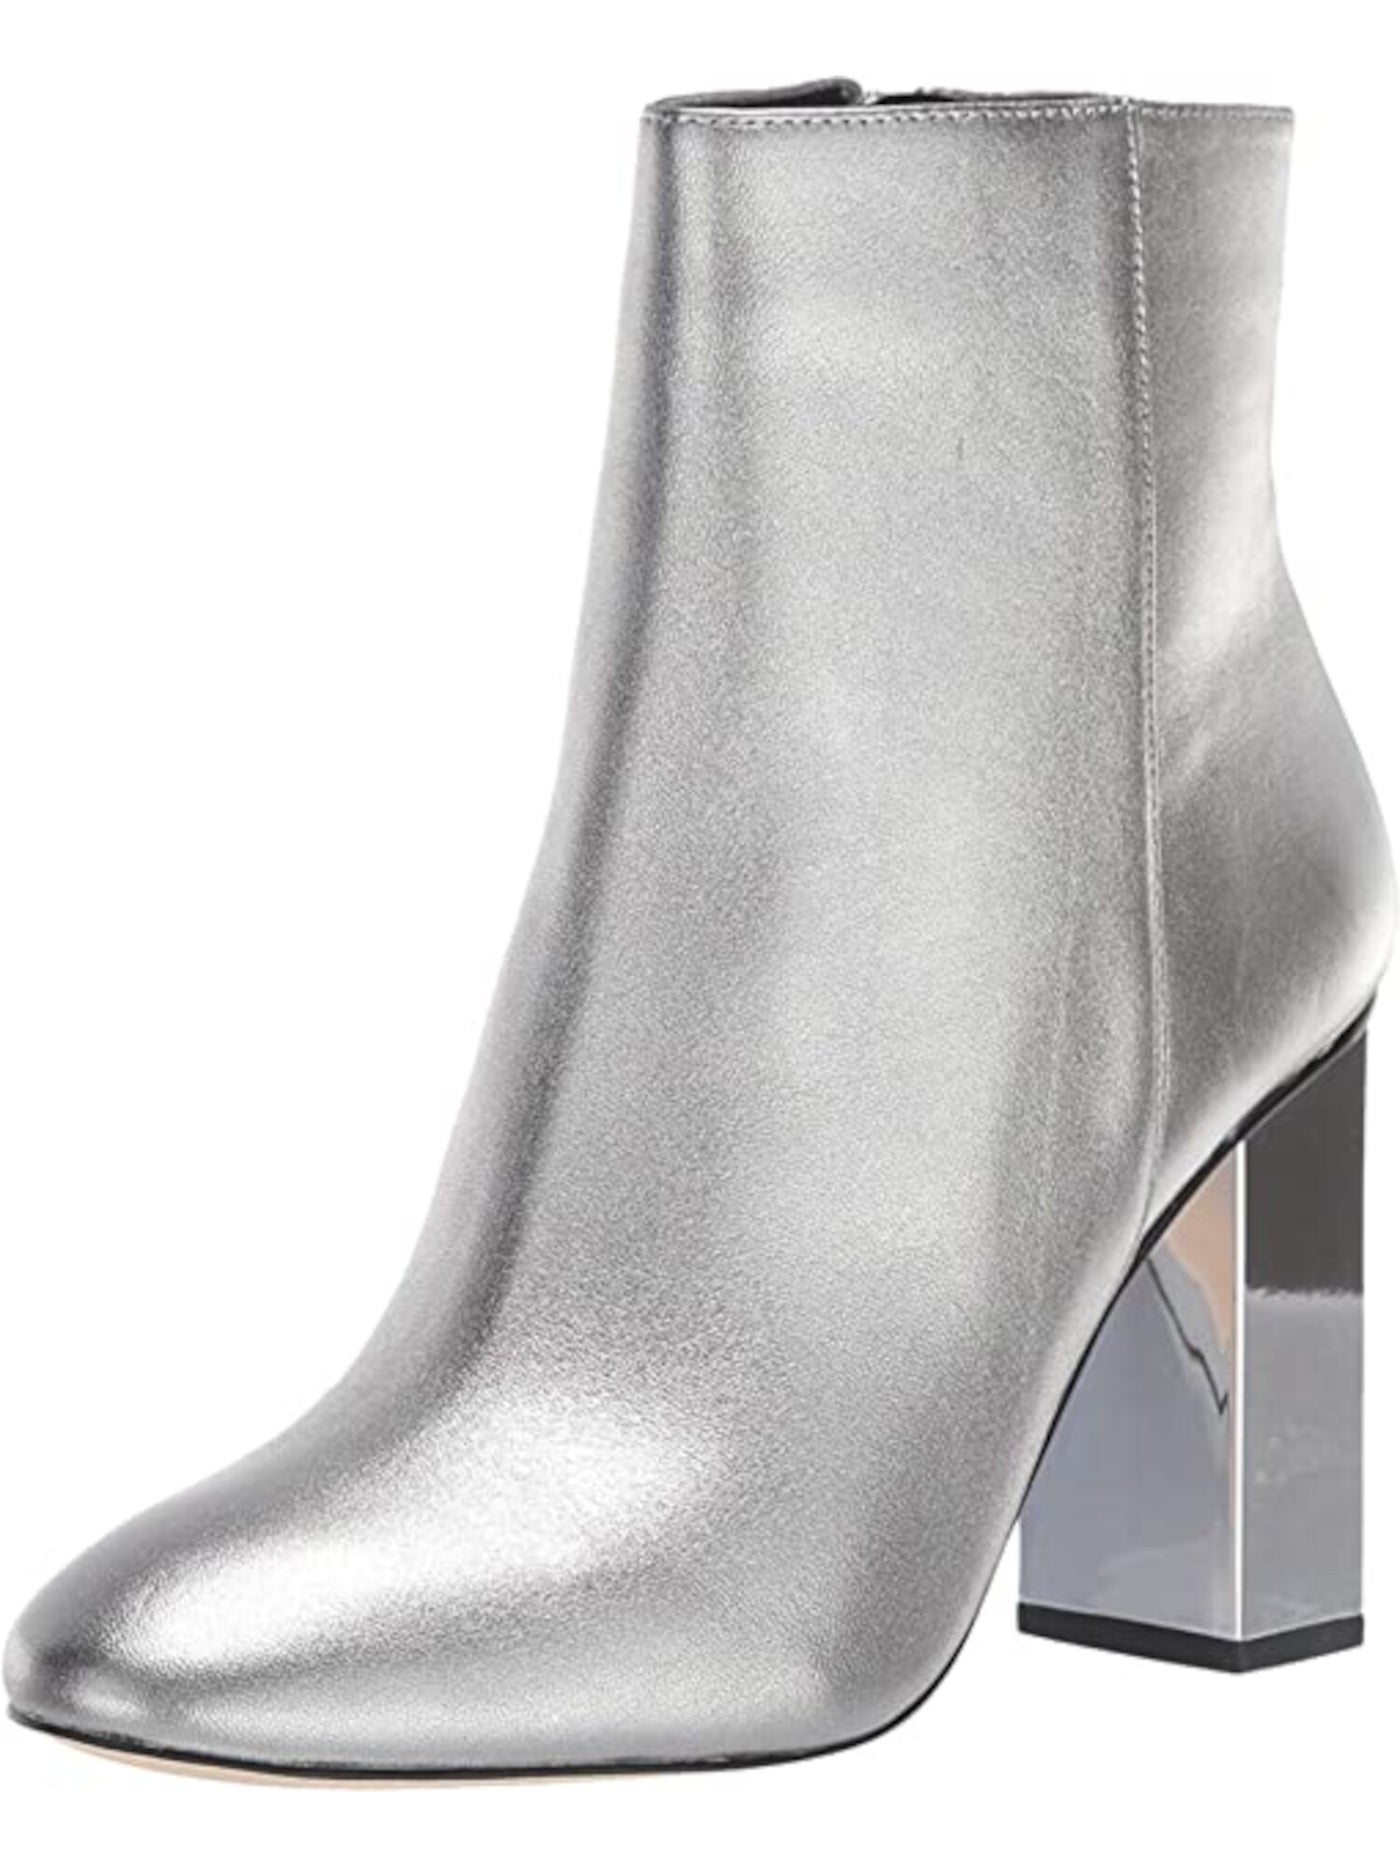 MICHAEL KORS Womens Silver Rhinestone Berkley Peep Toe Sculpted Heel Zip-Up Leather Dress Sandals Shoes 7 M